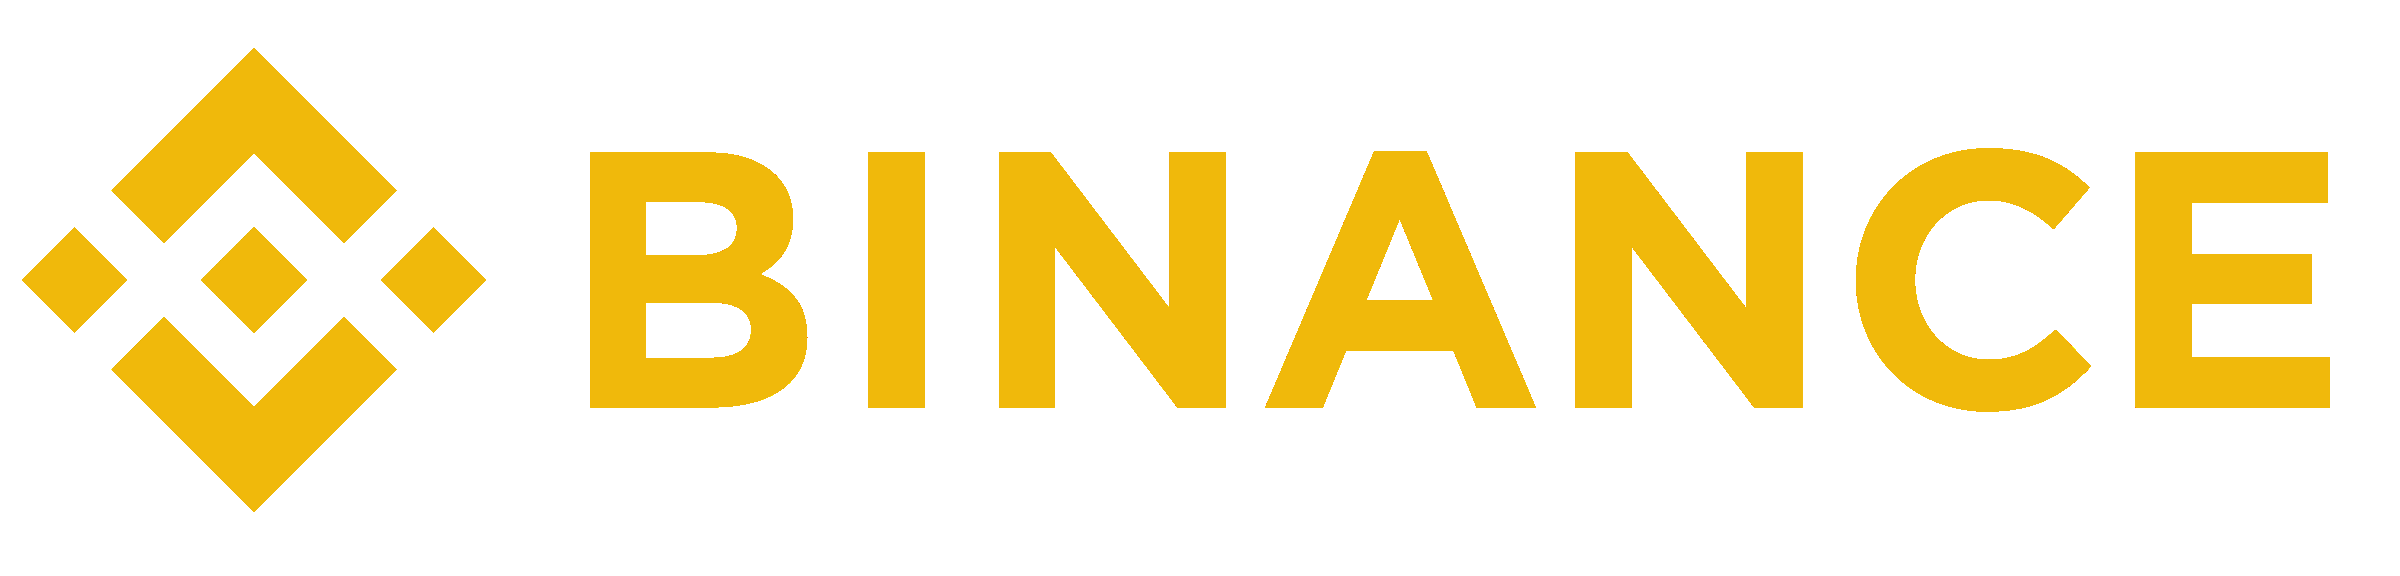 binanc_logo